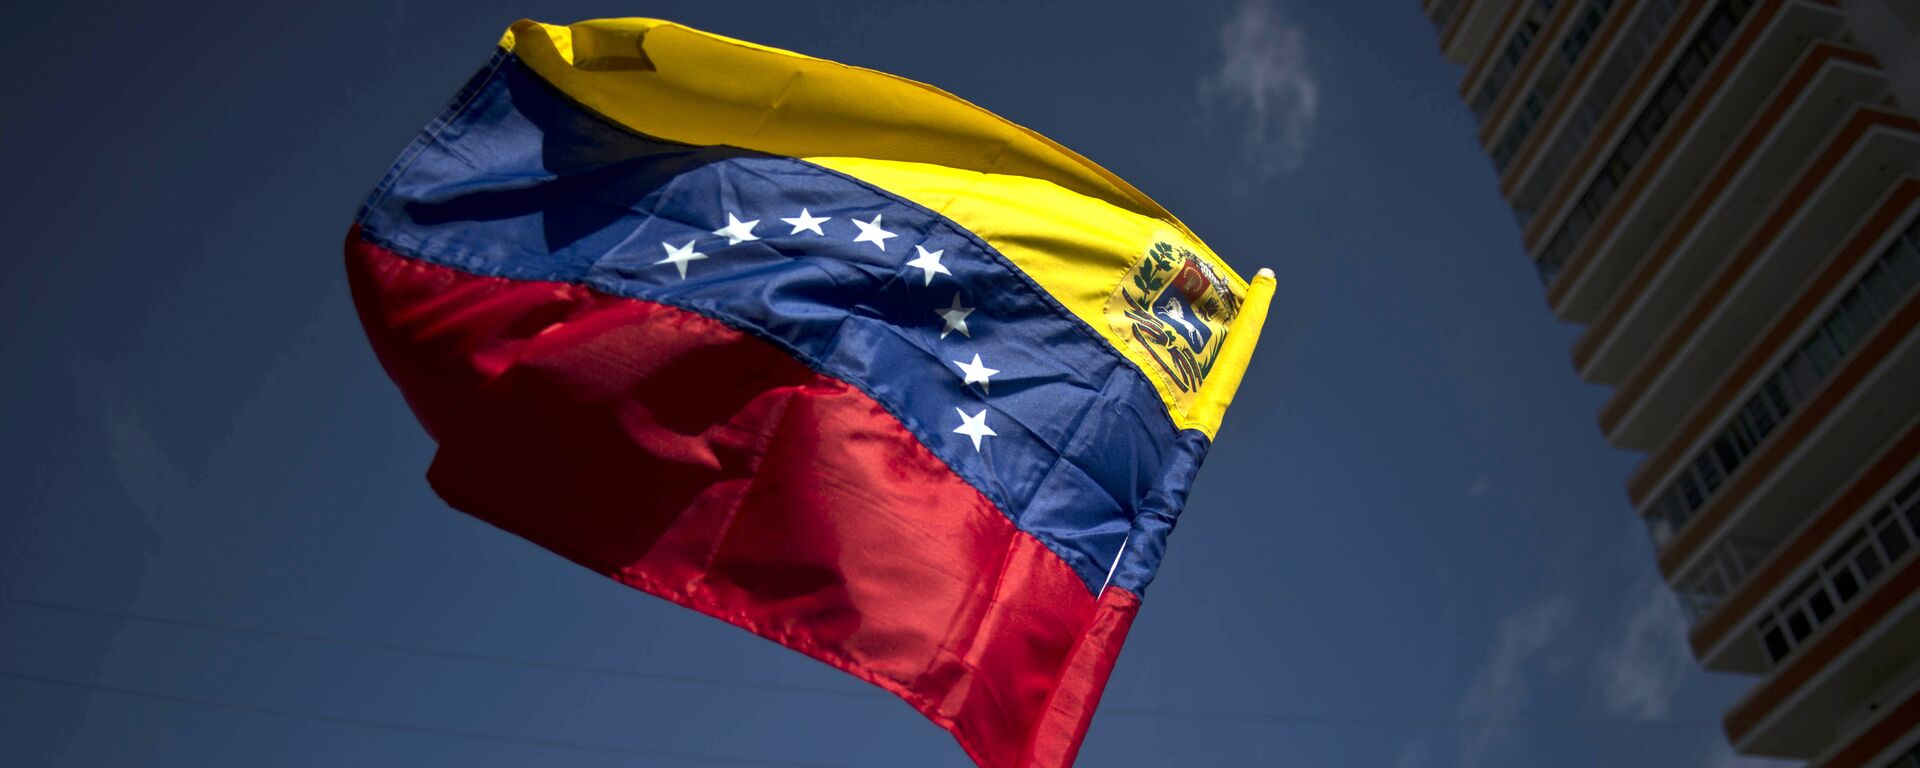 Bandera de Venezuela - Sputnik Mundo, 1920, 18.09.2020